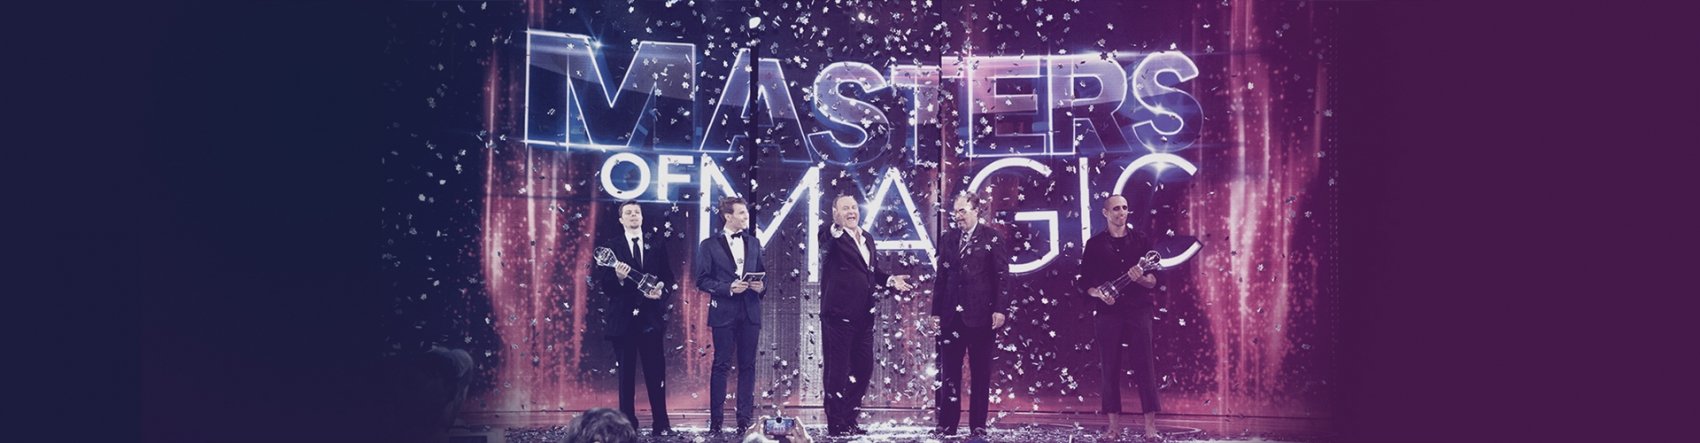 Masters of Magic 2016